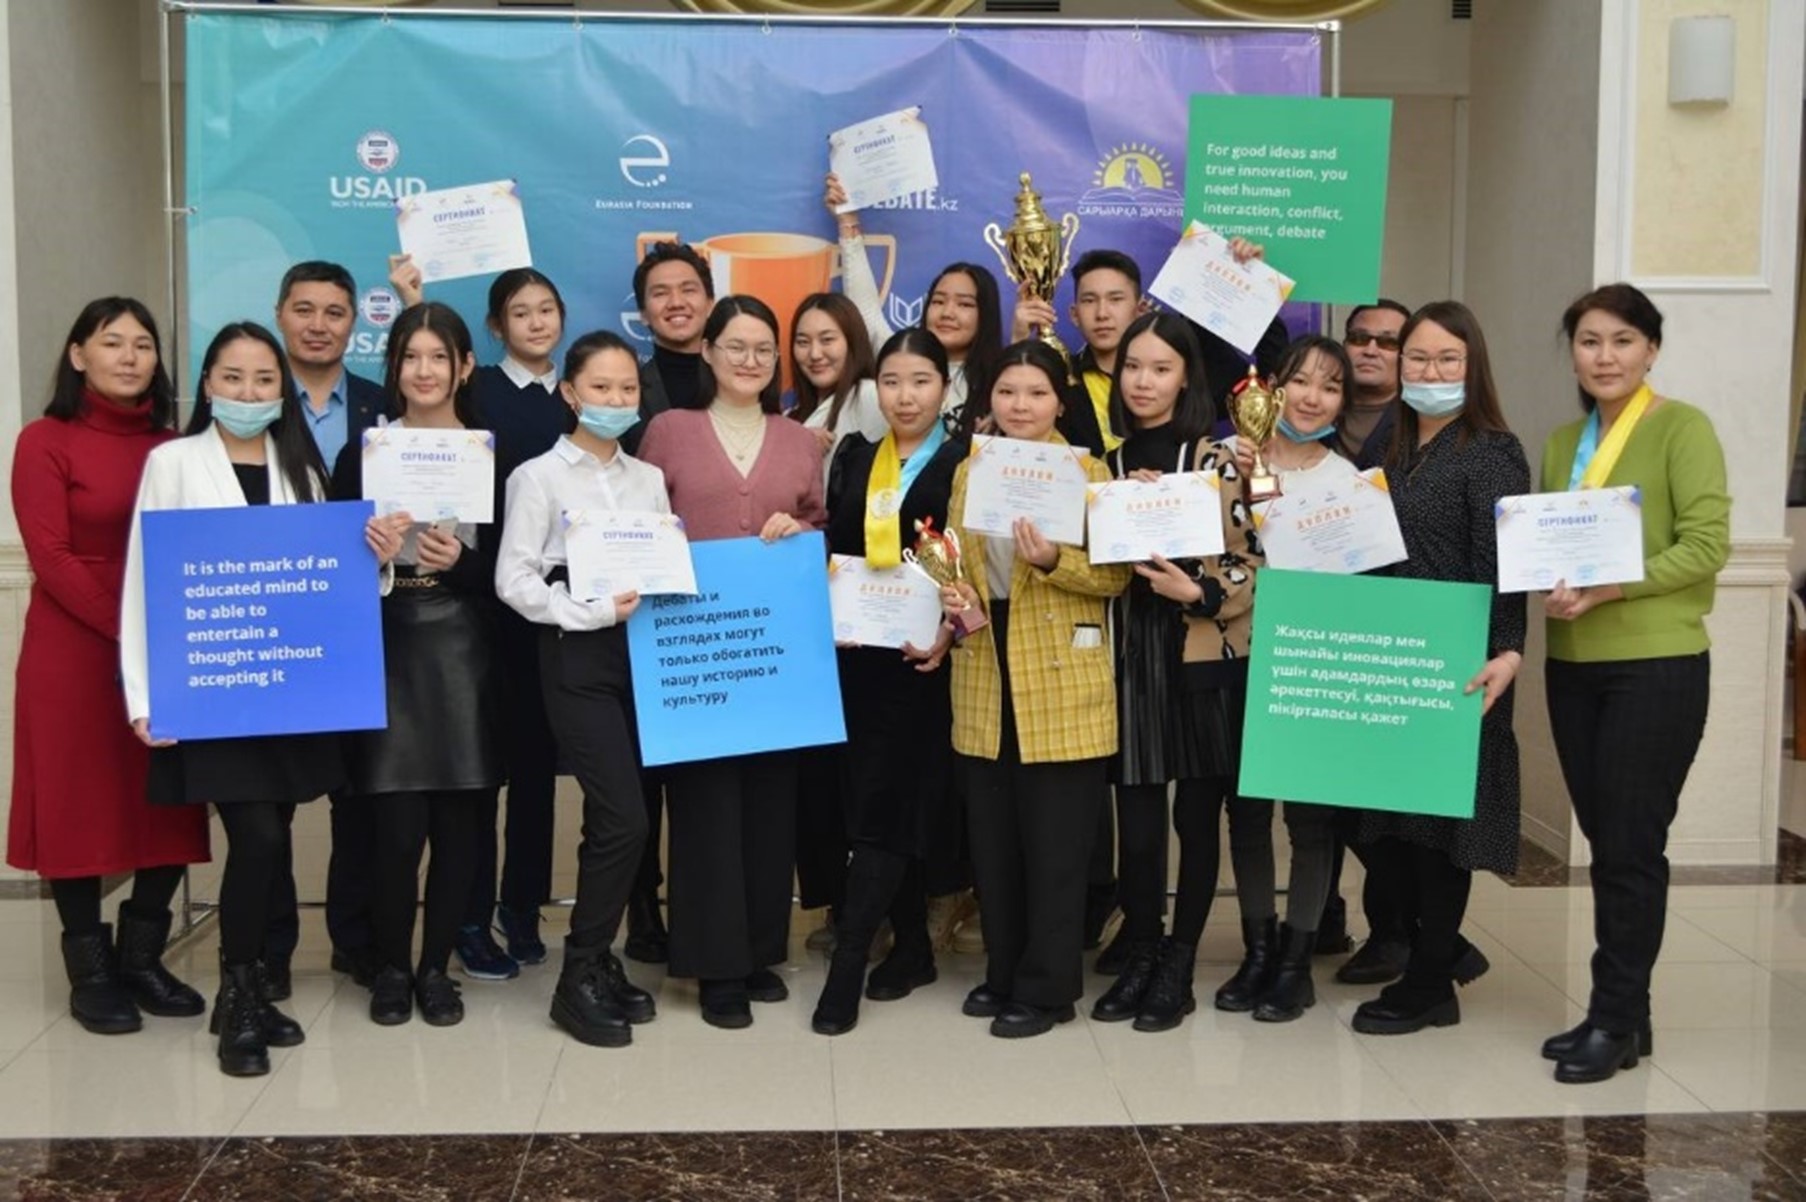 Debate.kz Bridges Rural-Urban Divide, Creates Opportunities for Kazakh-Speaking Youth